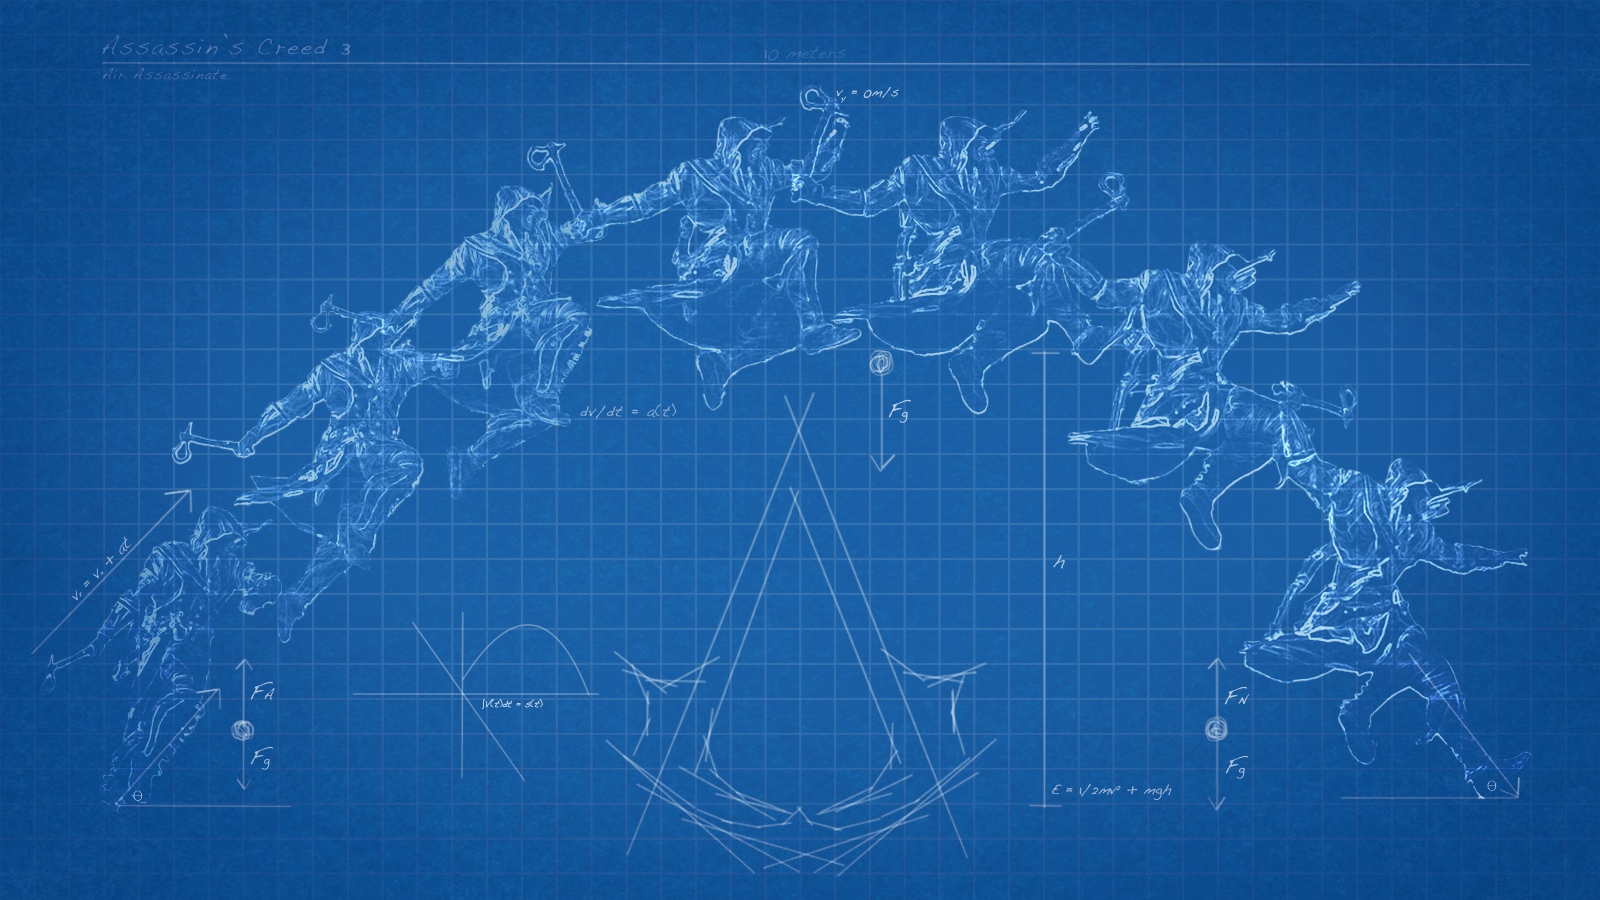 Assassins creed blueprint wallpaper by pablodoogenfloggen on